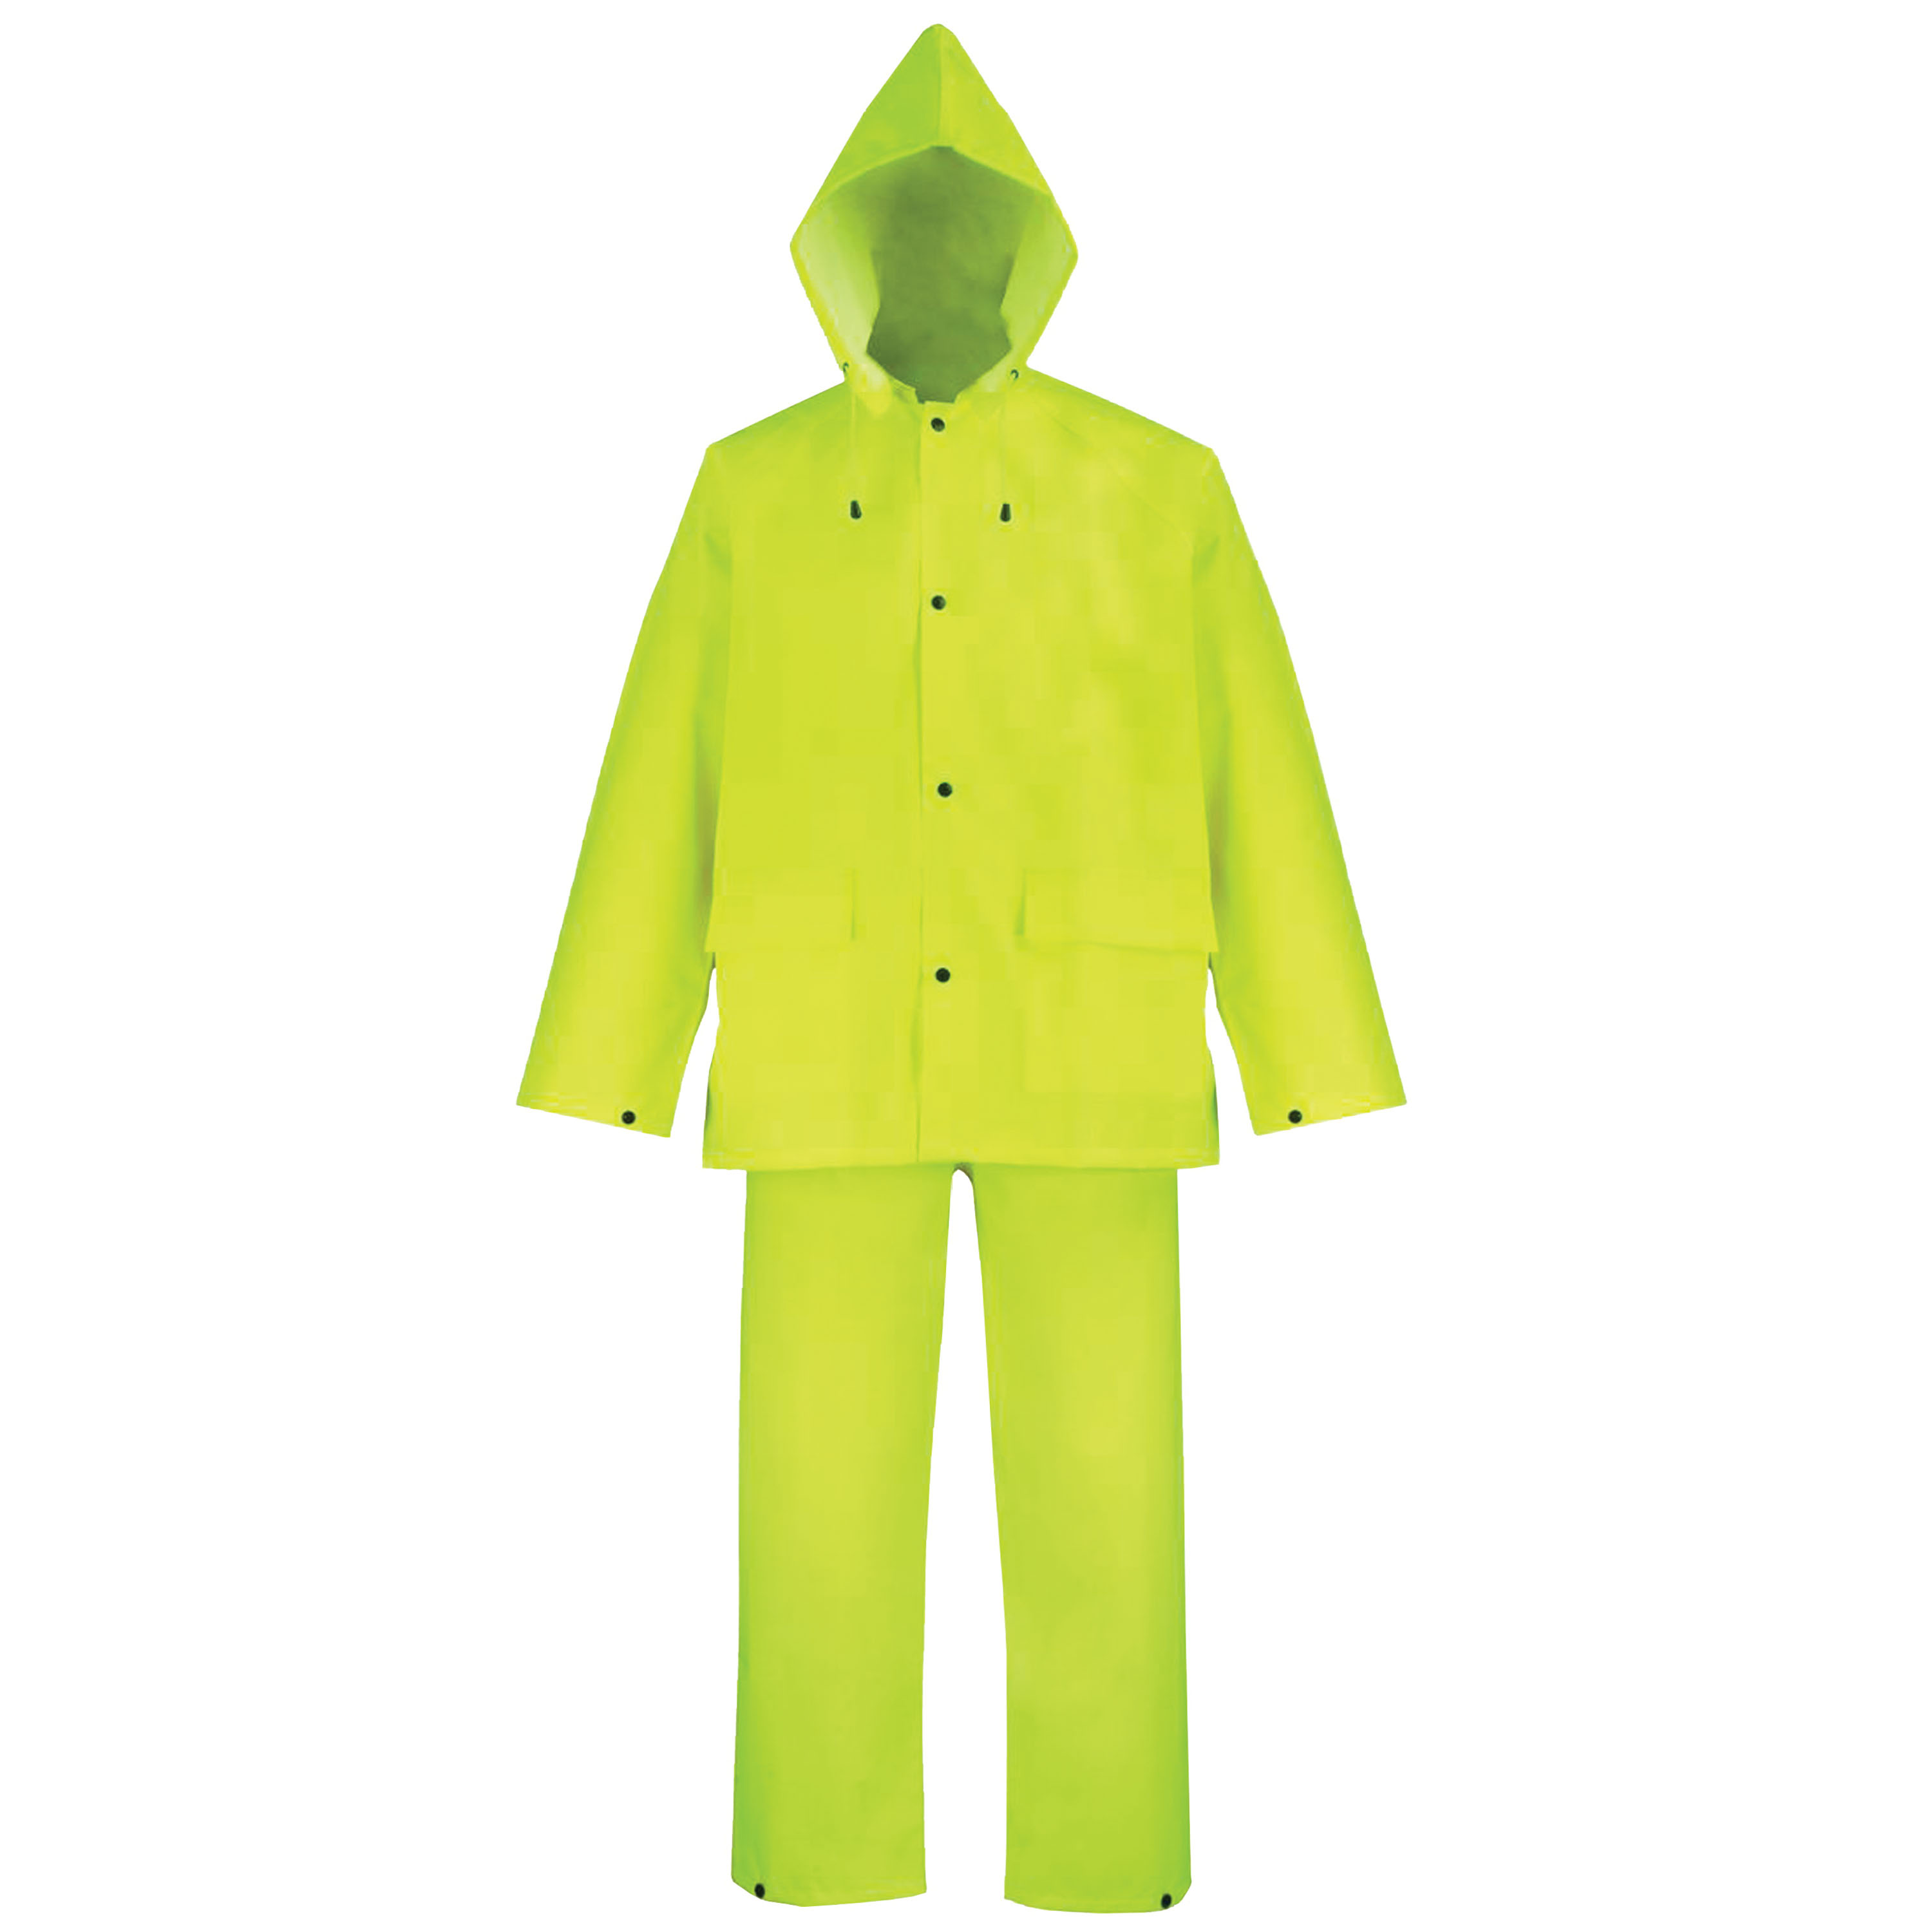 OX025PU-XL Rain Suit, XL, 30-1/2 in Inseam, Polyester, Hi-Viz Yellow, Comfortable Oxford Polyester Collar